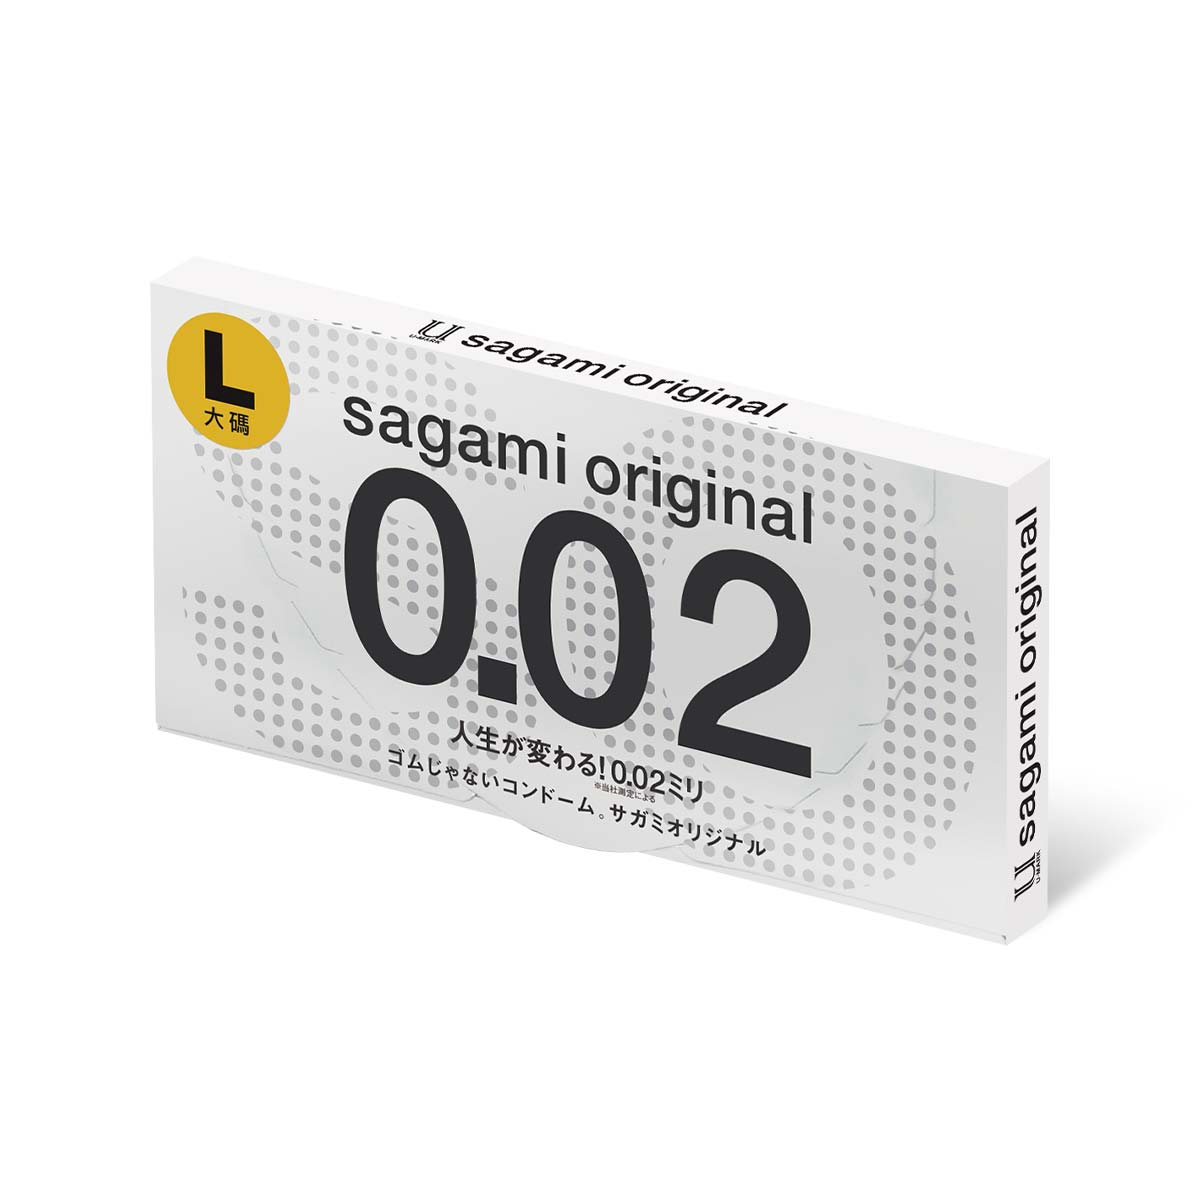 Sagami Original 0.02 L-size 58mm 2's Pack PU Condom-thumb_1